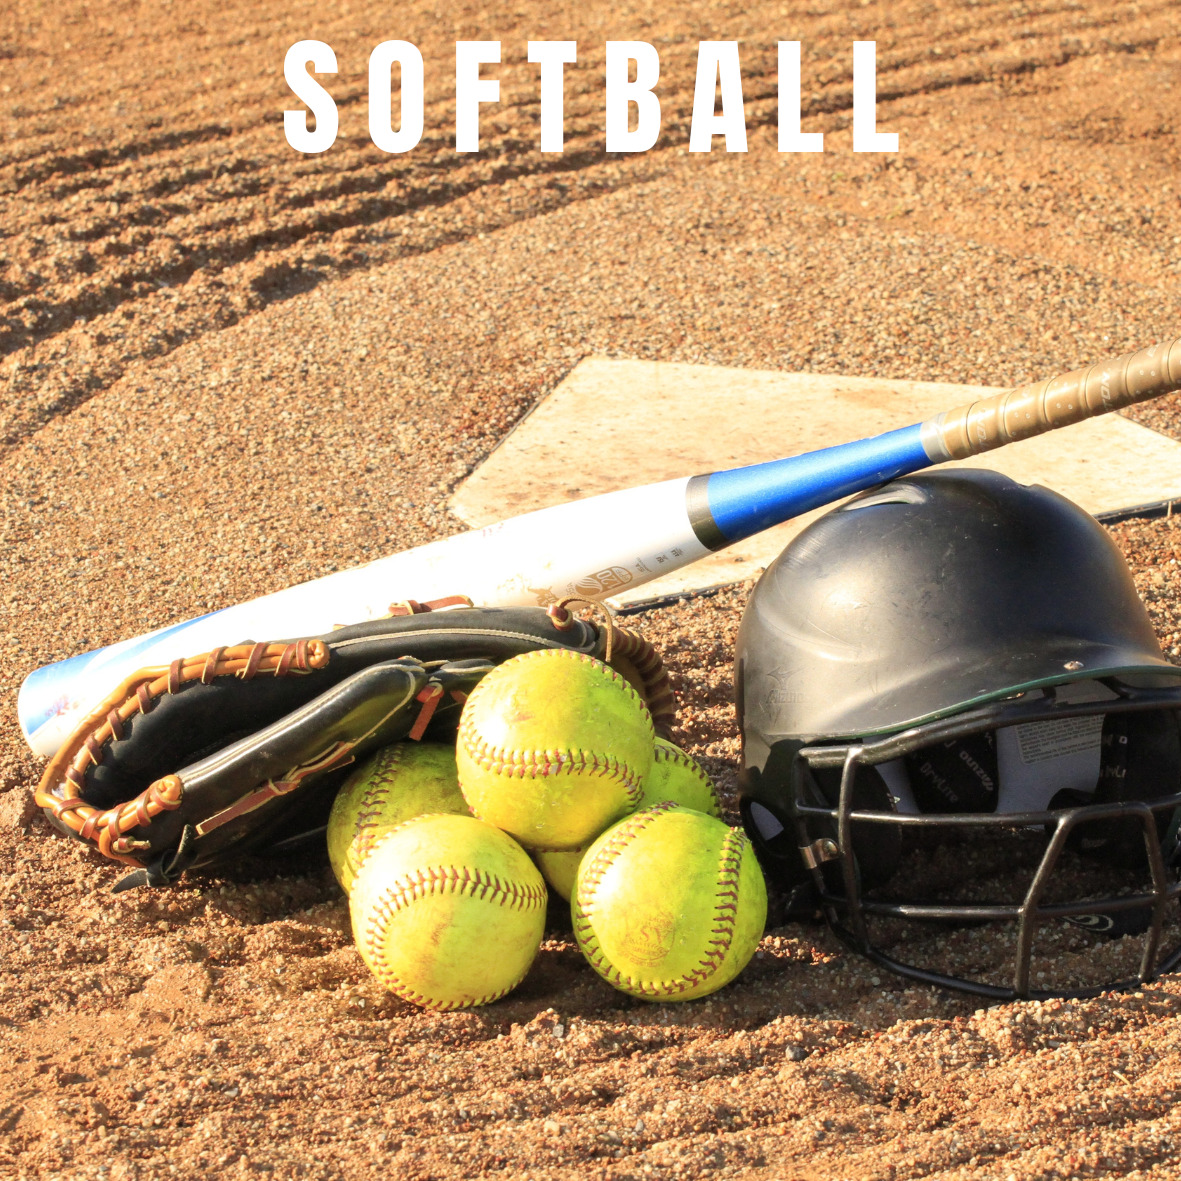 softballs with bat and helmet on dirt field